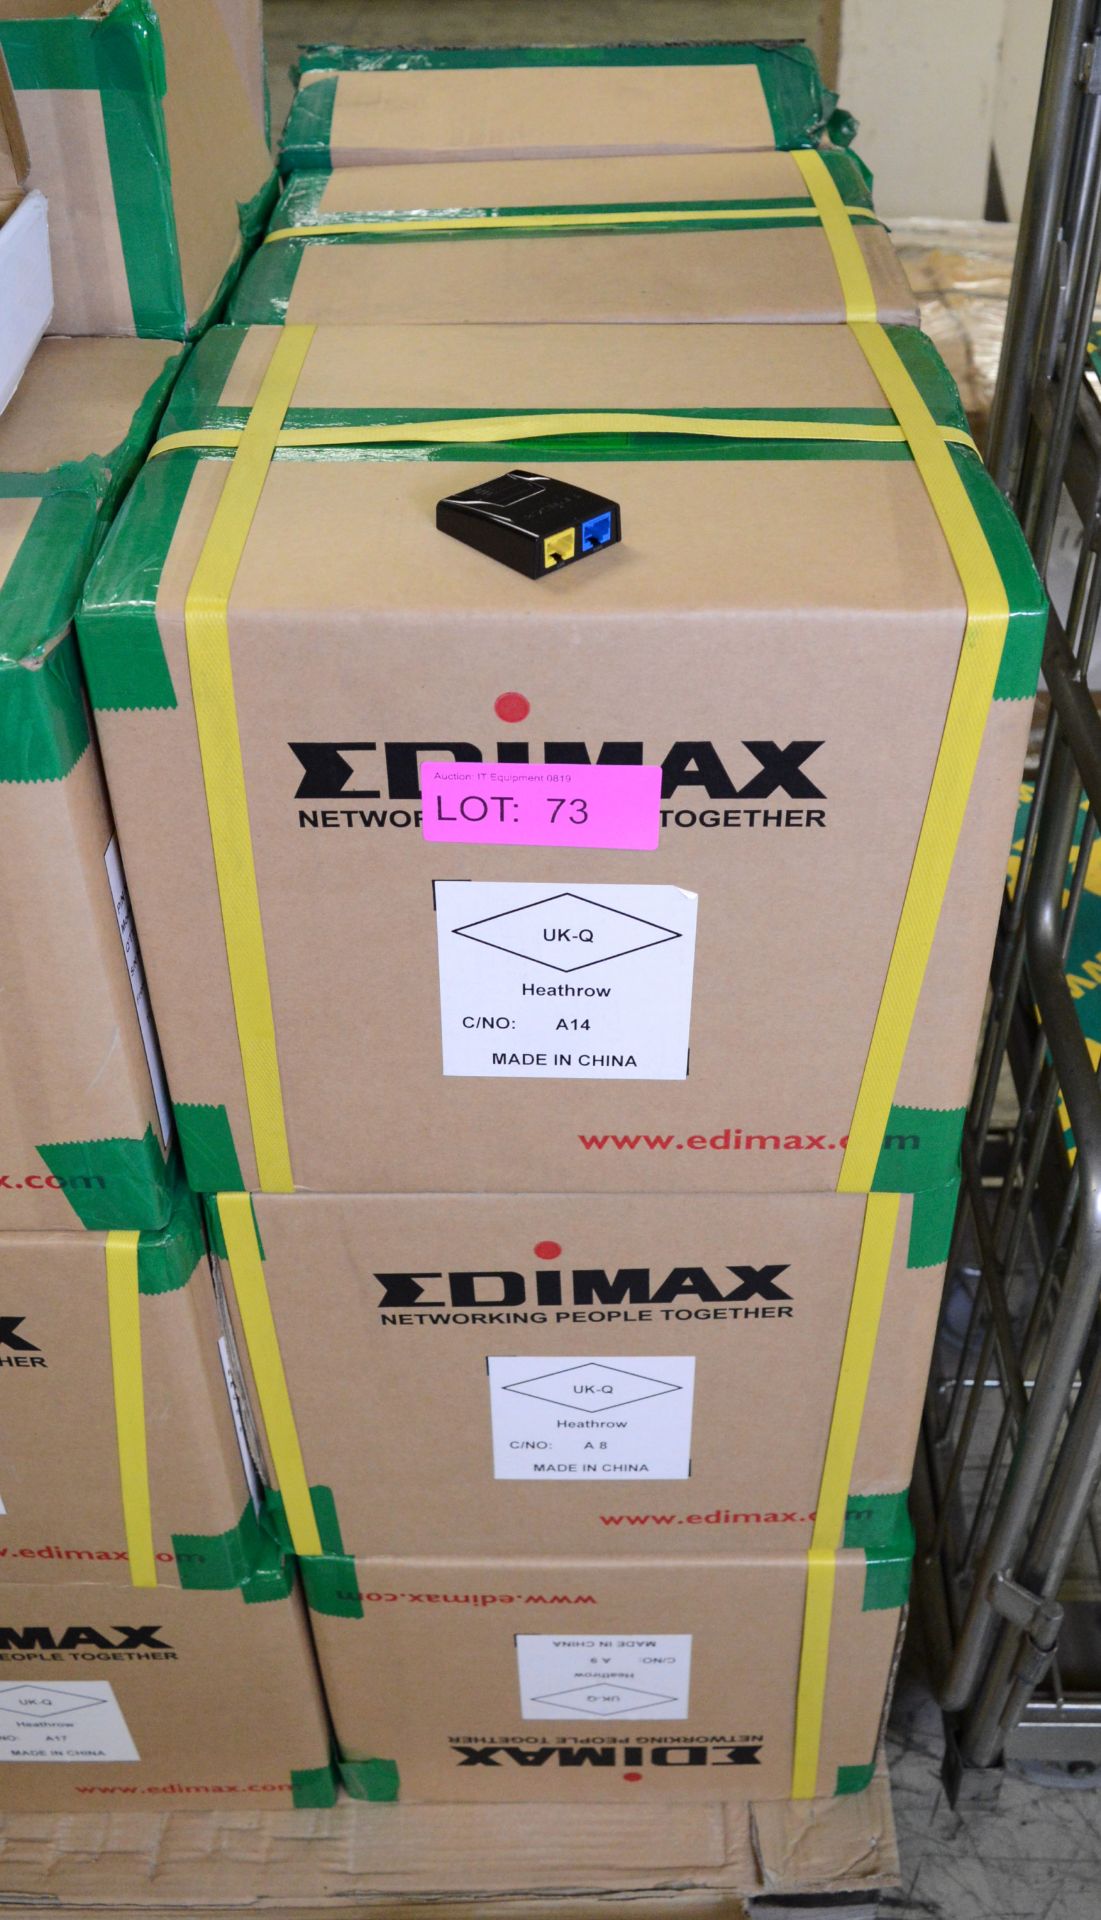 Edimax BR-6258N (V1.0 A) - single socket mini modems - 250 per box - 9 boxes